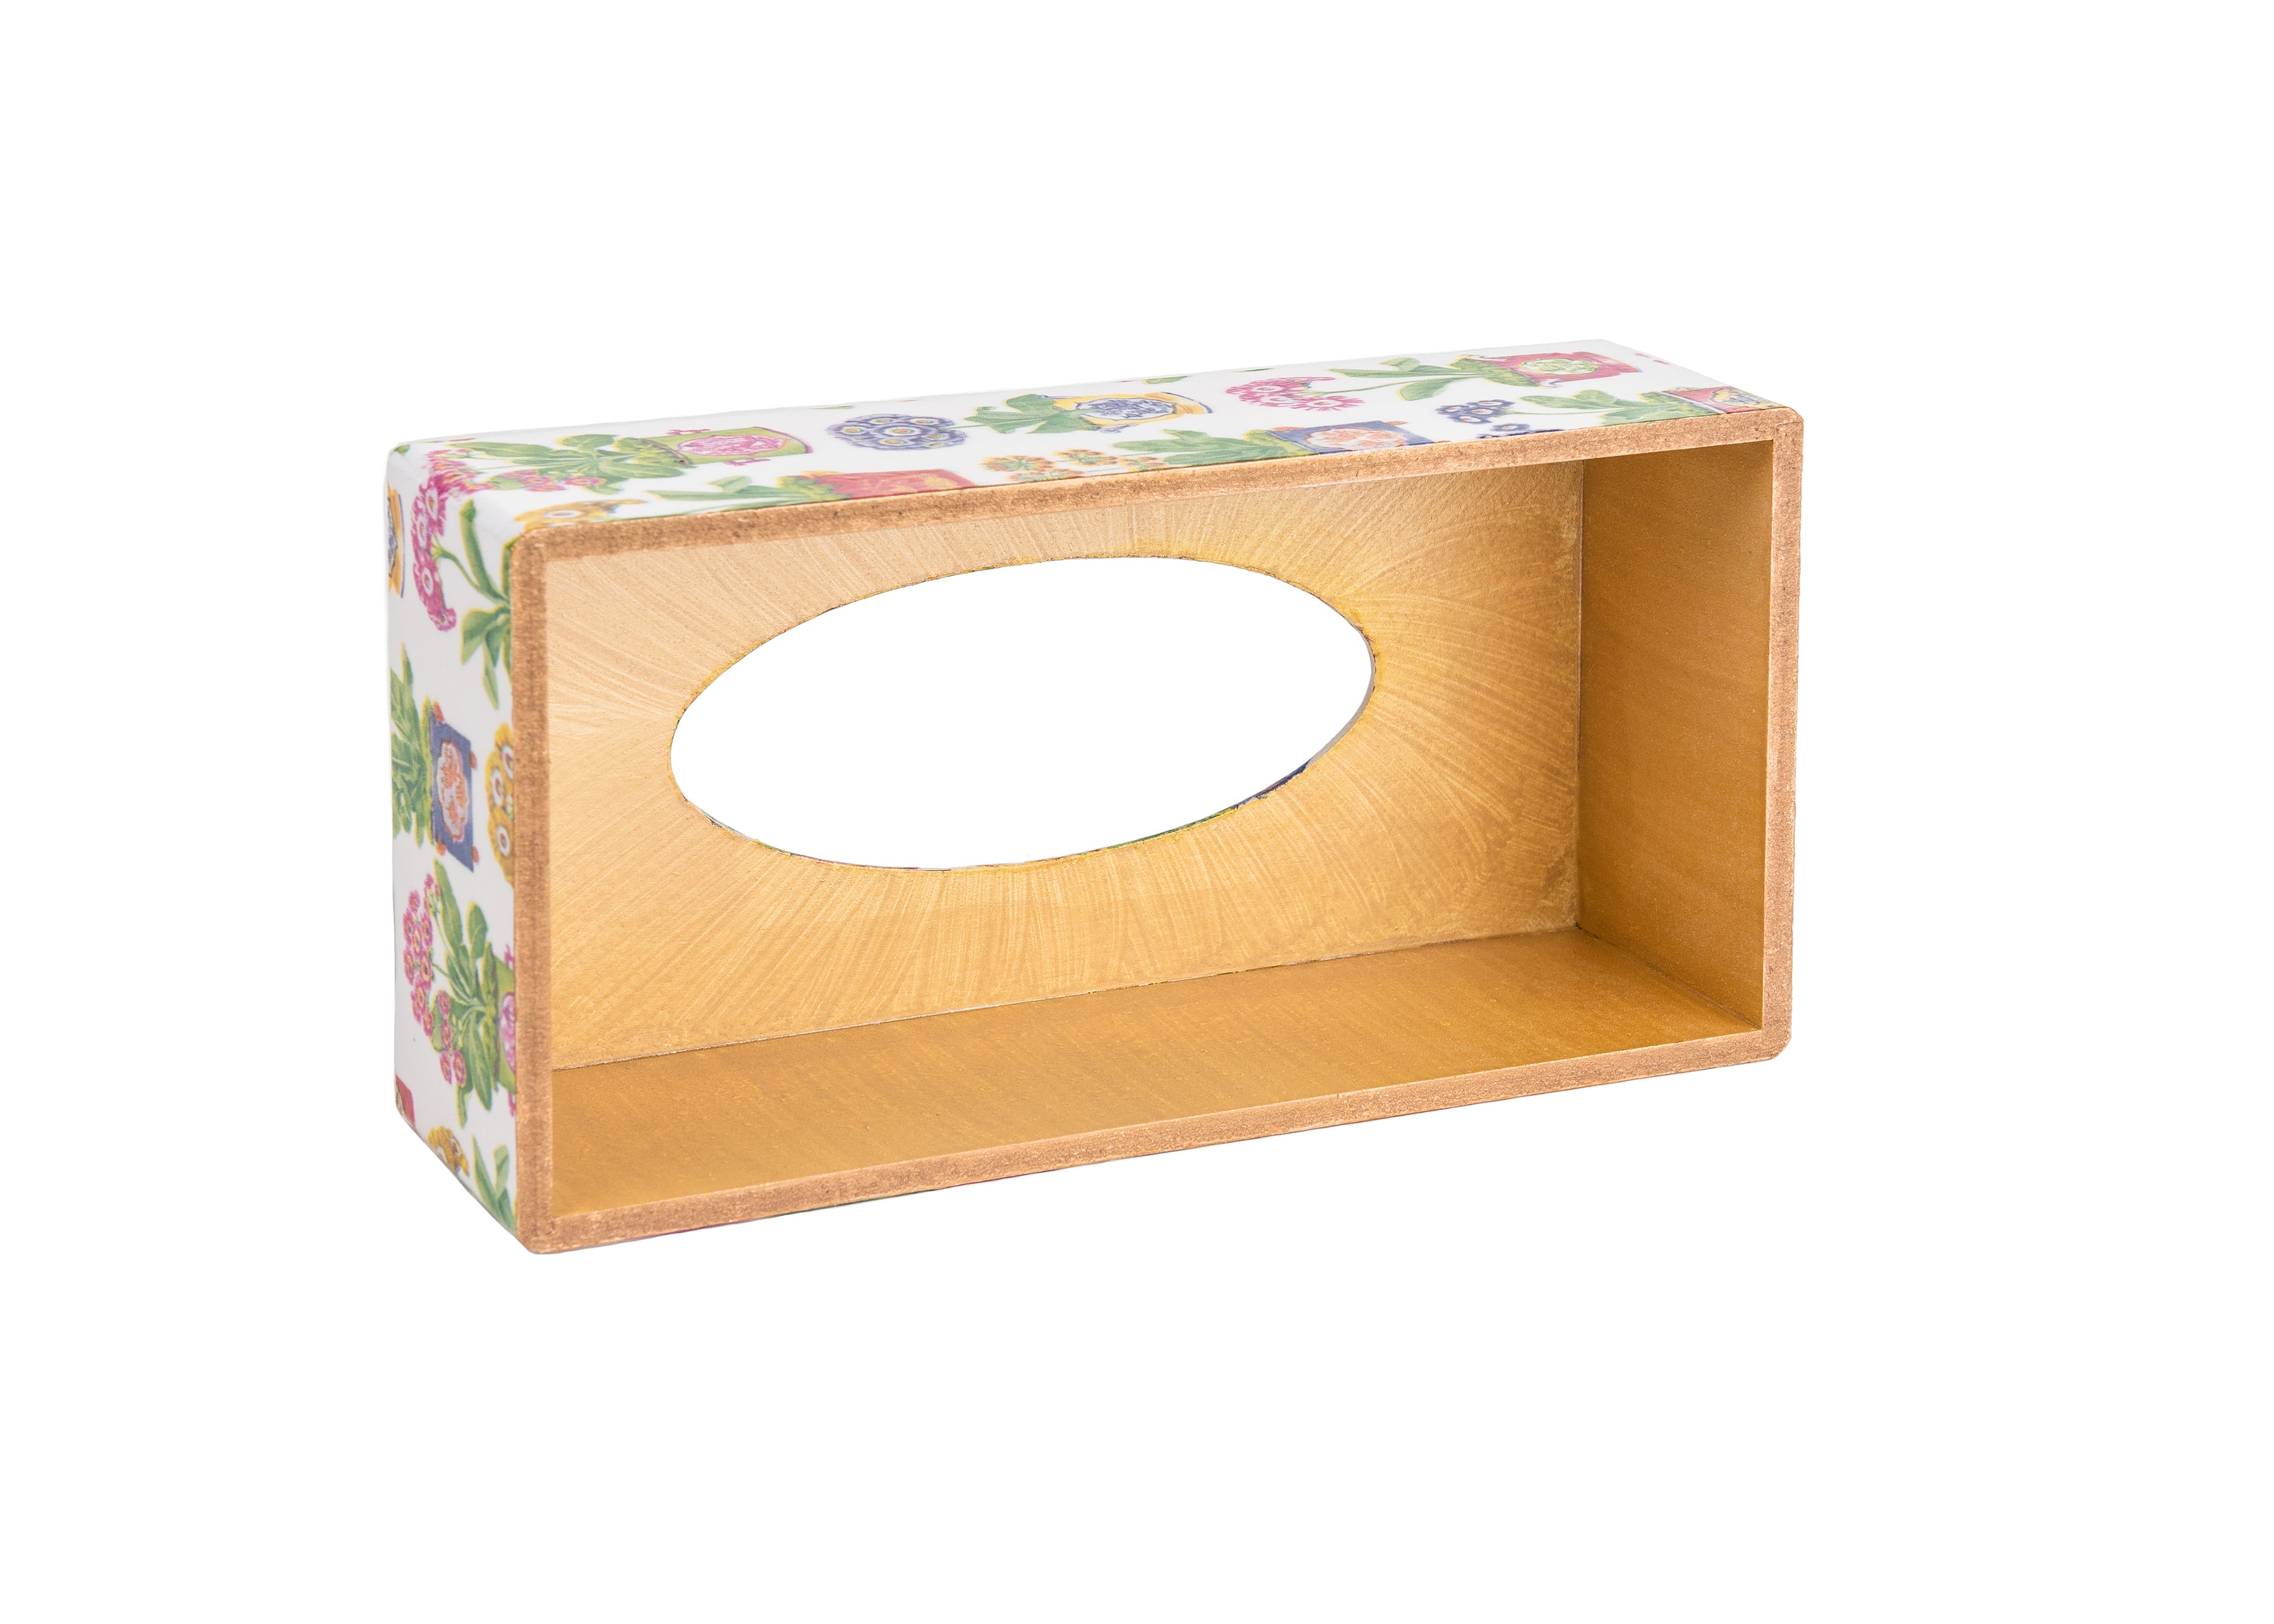 Orange Lantern wooden Tissue Box Cover